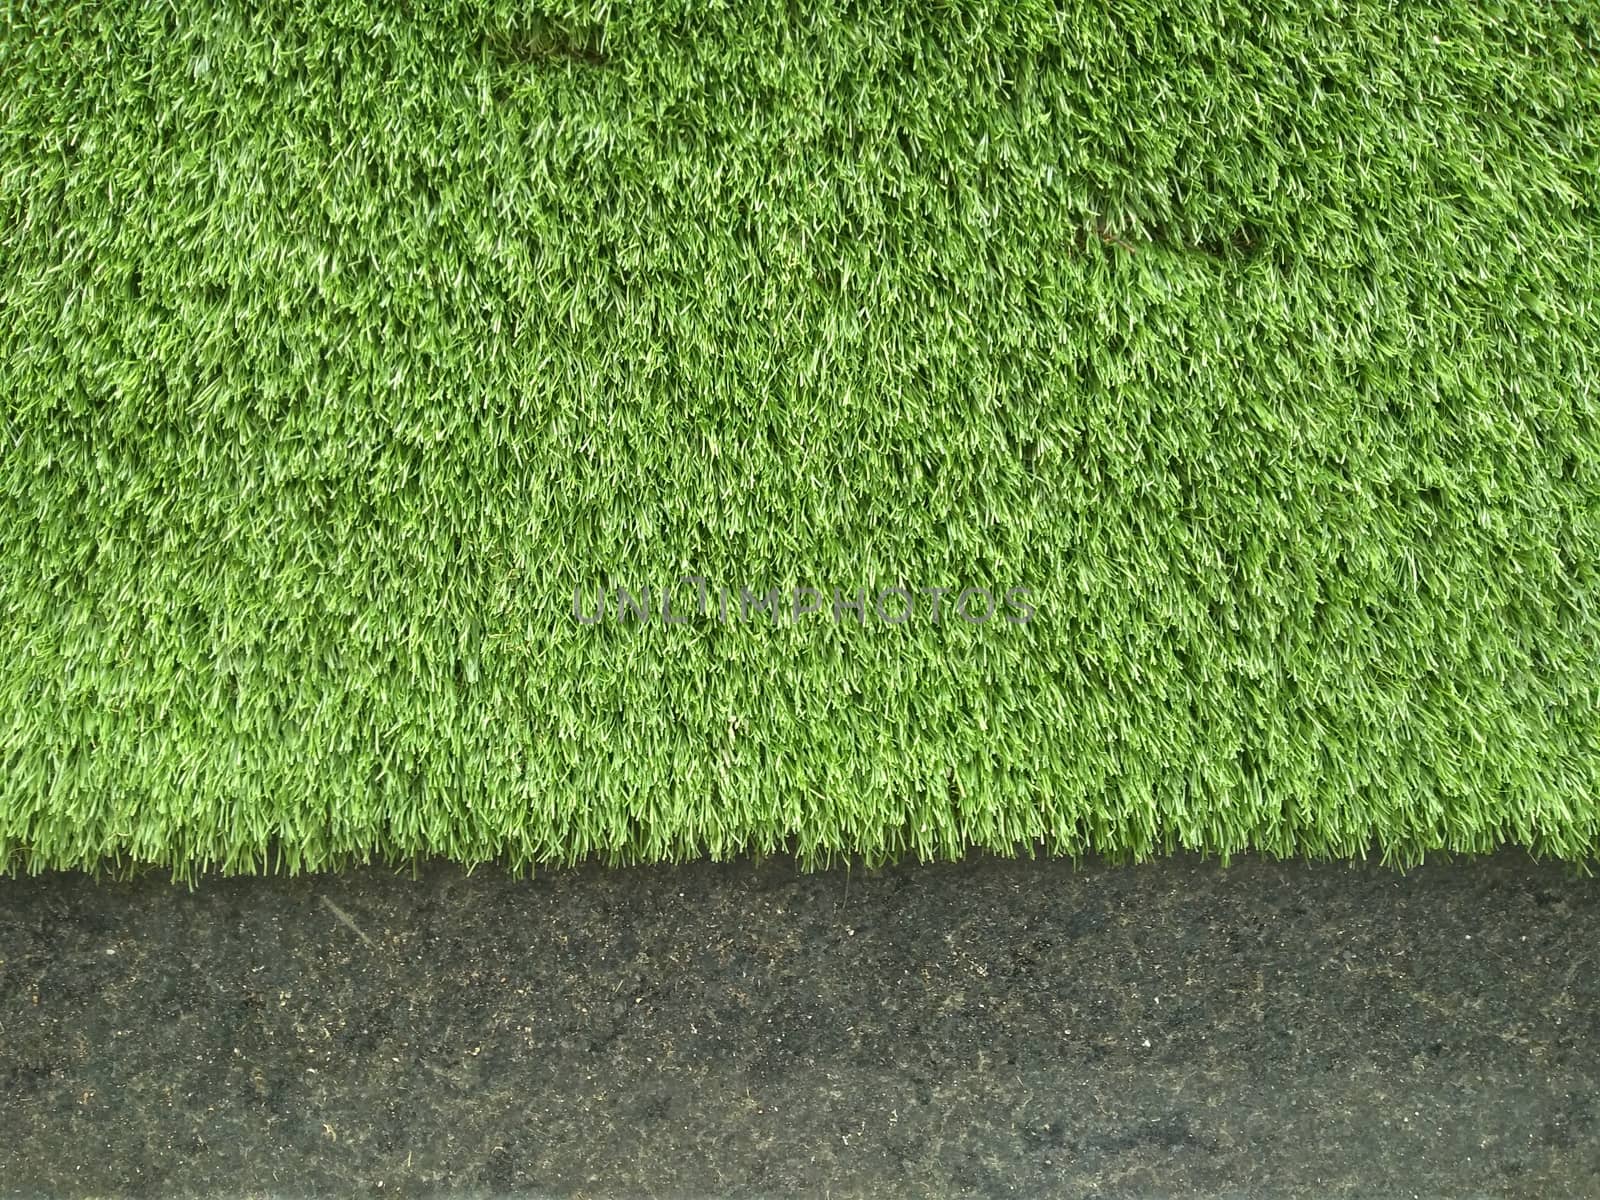 Artificial greener grass backdrop close up photo.